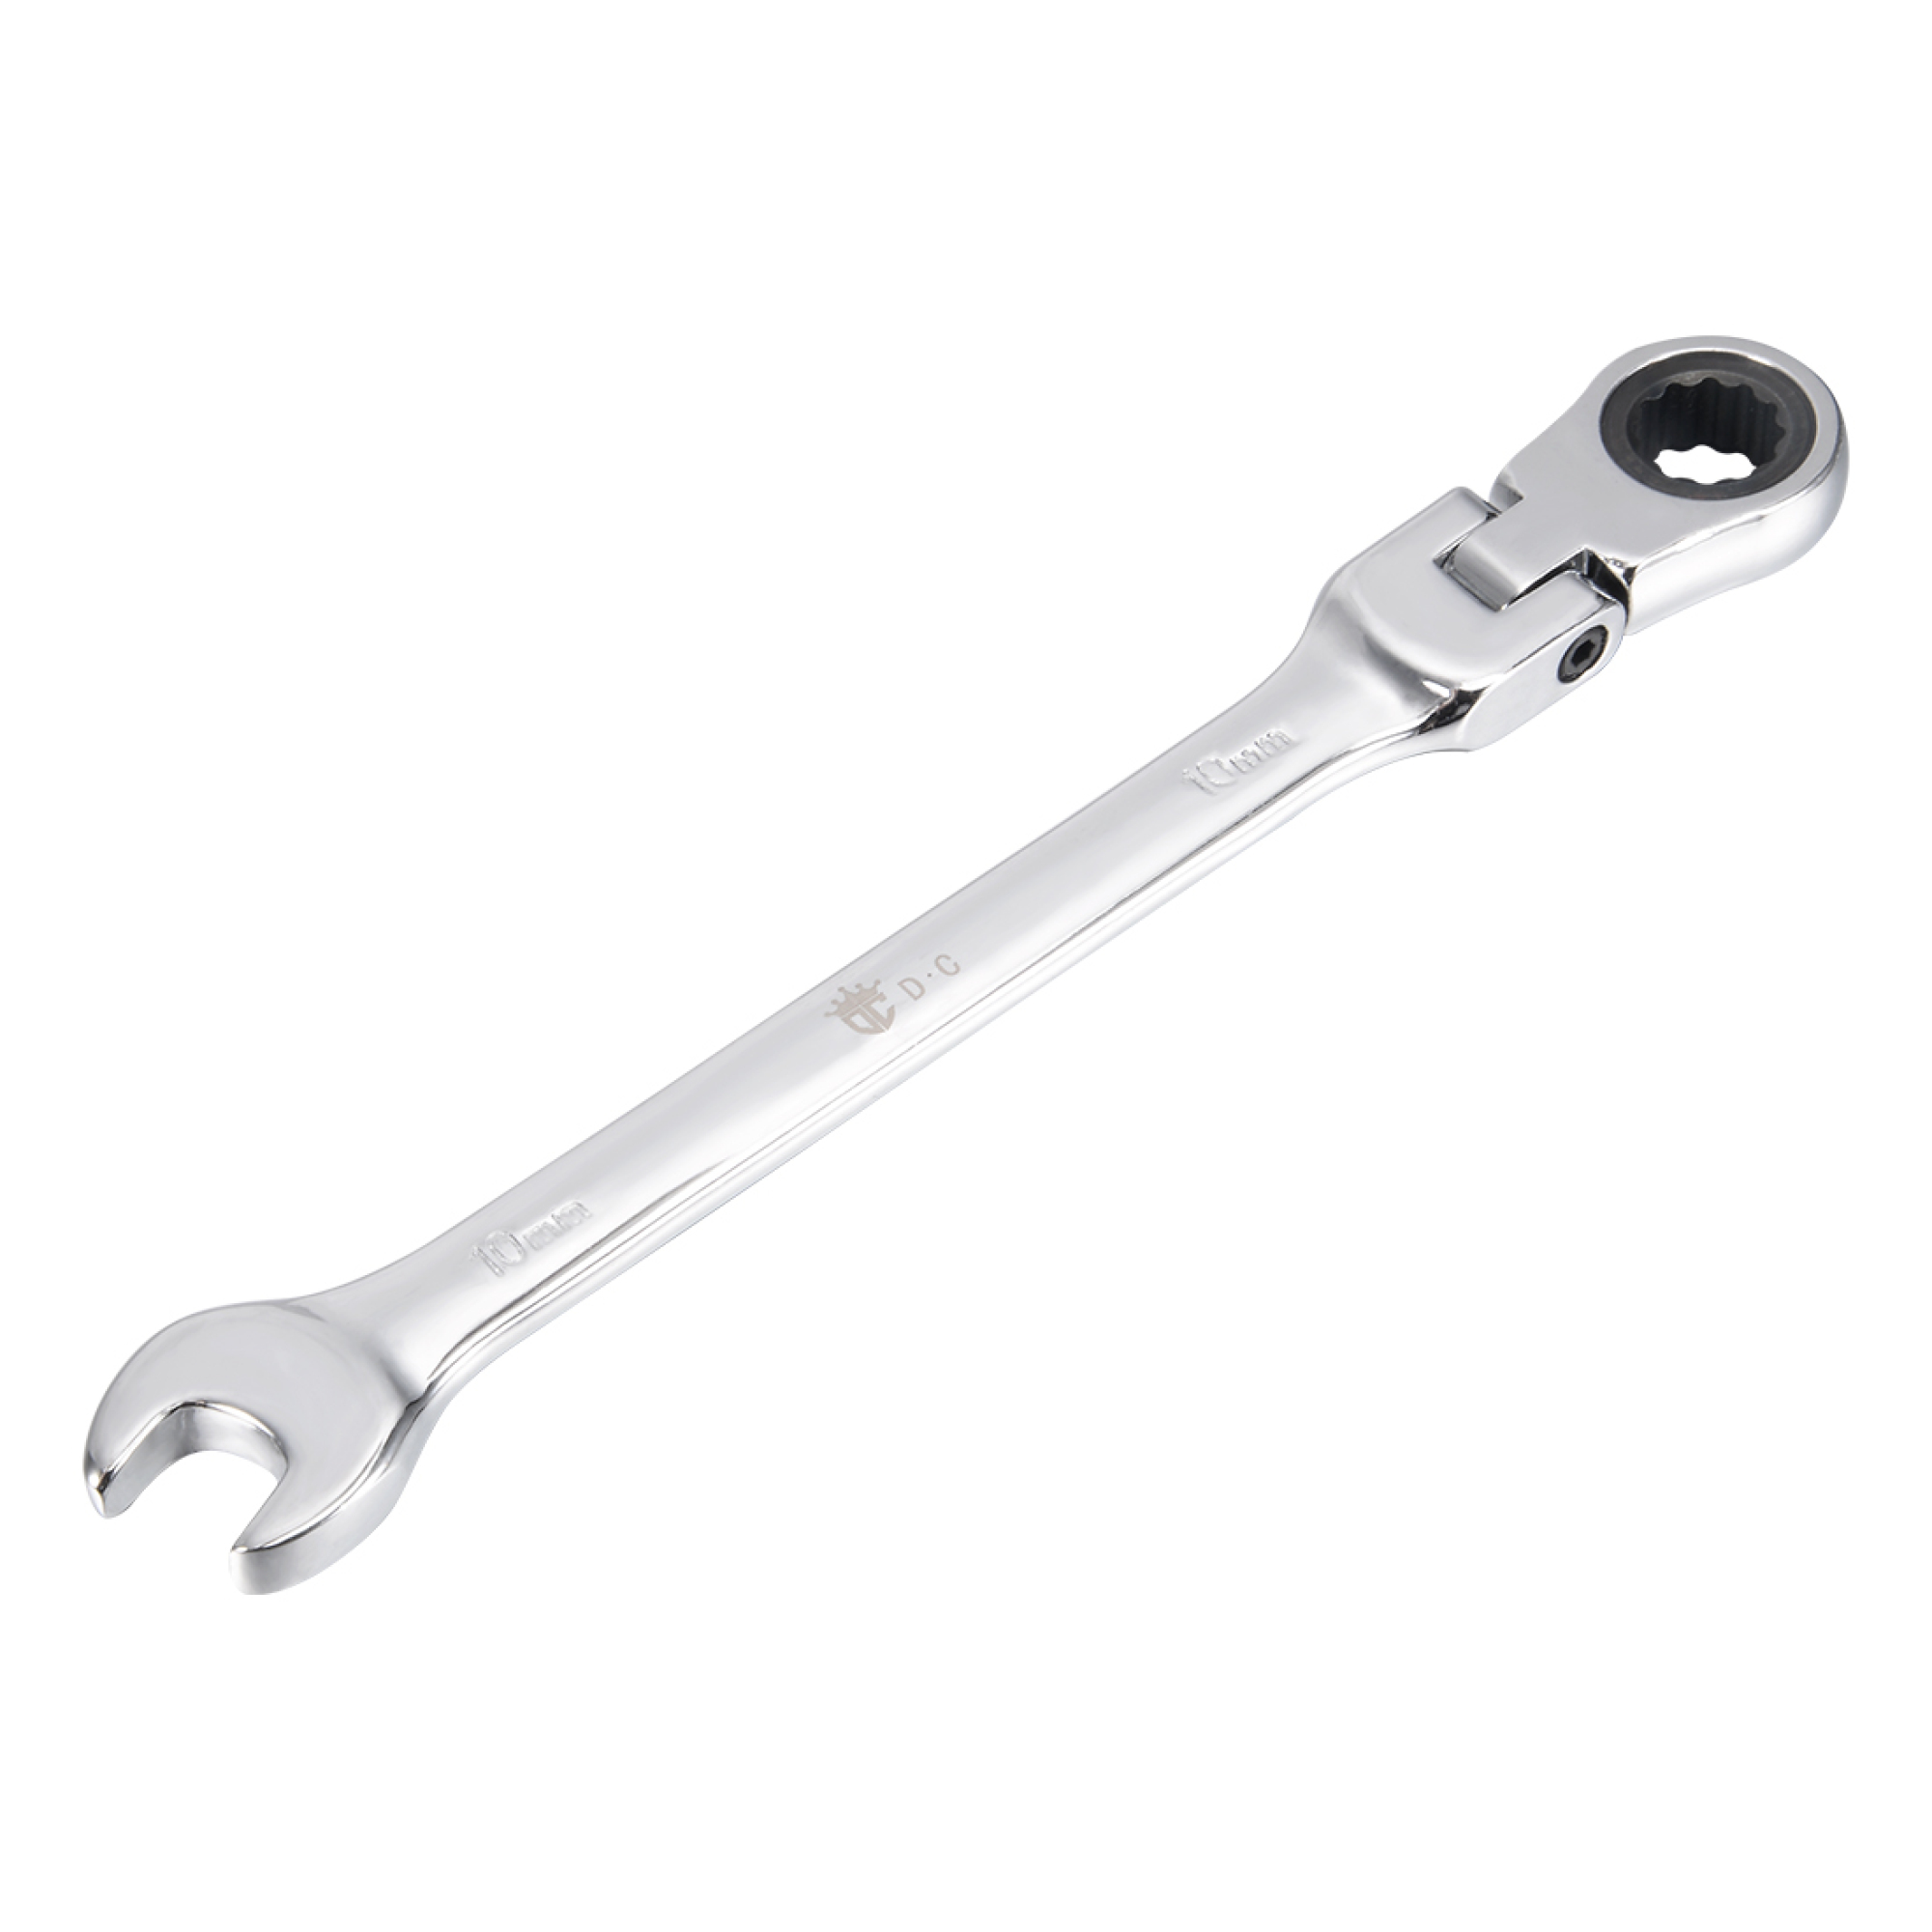 Flex-Head Ratchet Combination Wrench, Cr-V Chrome